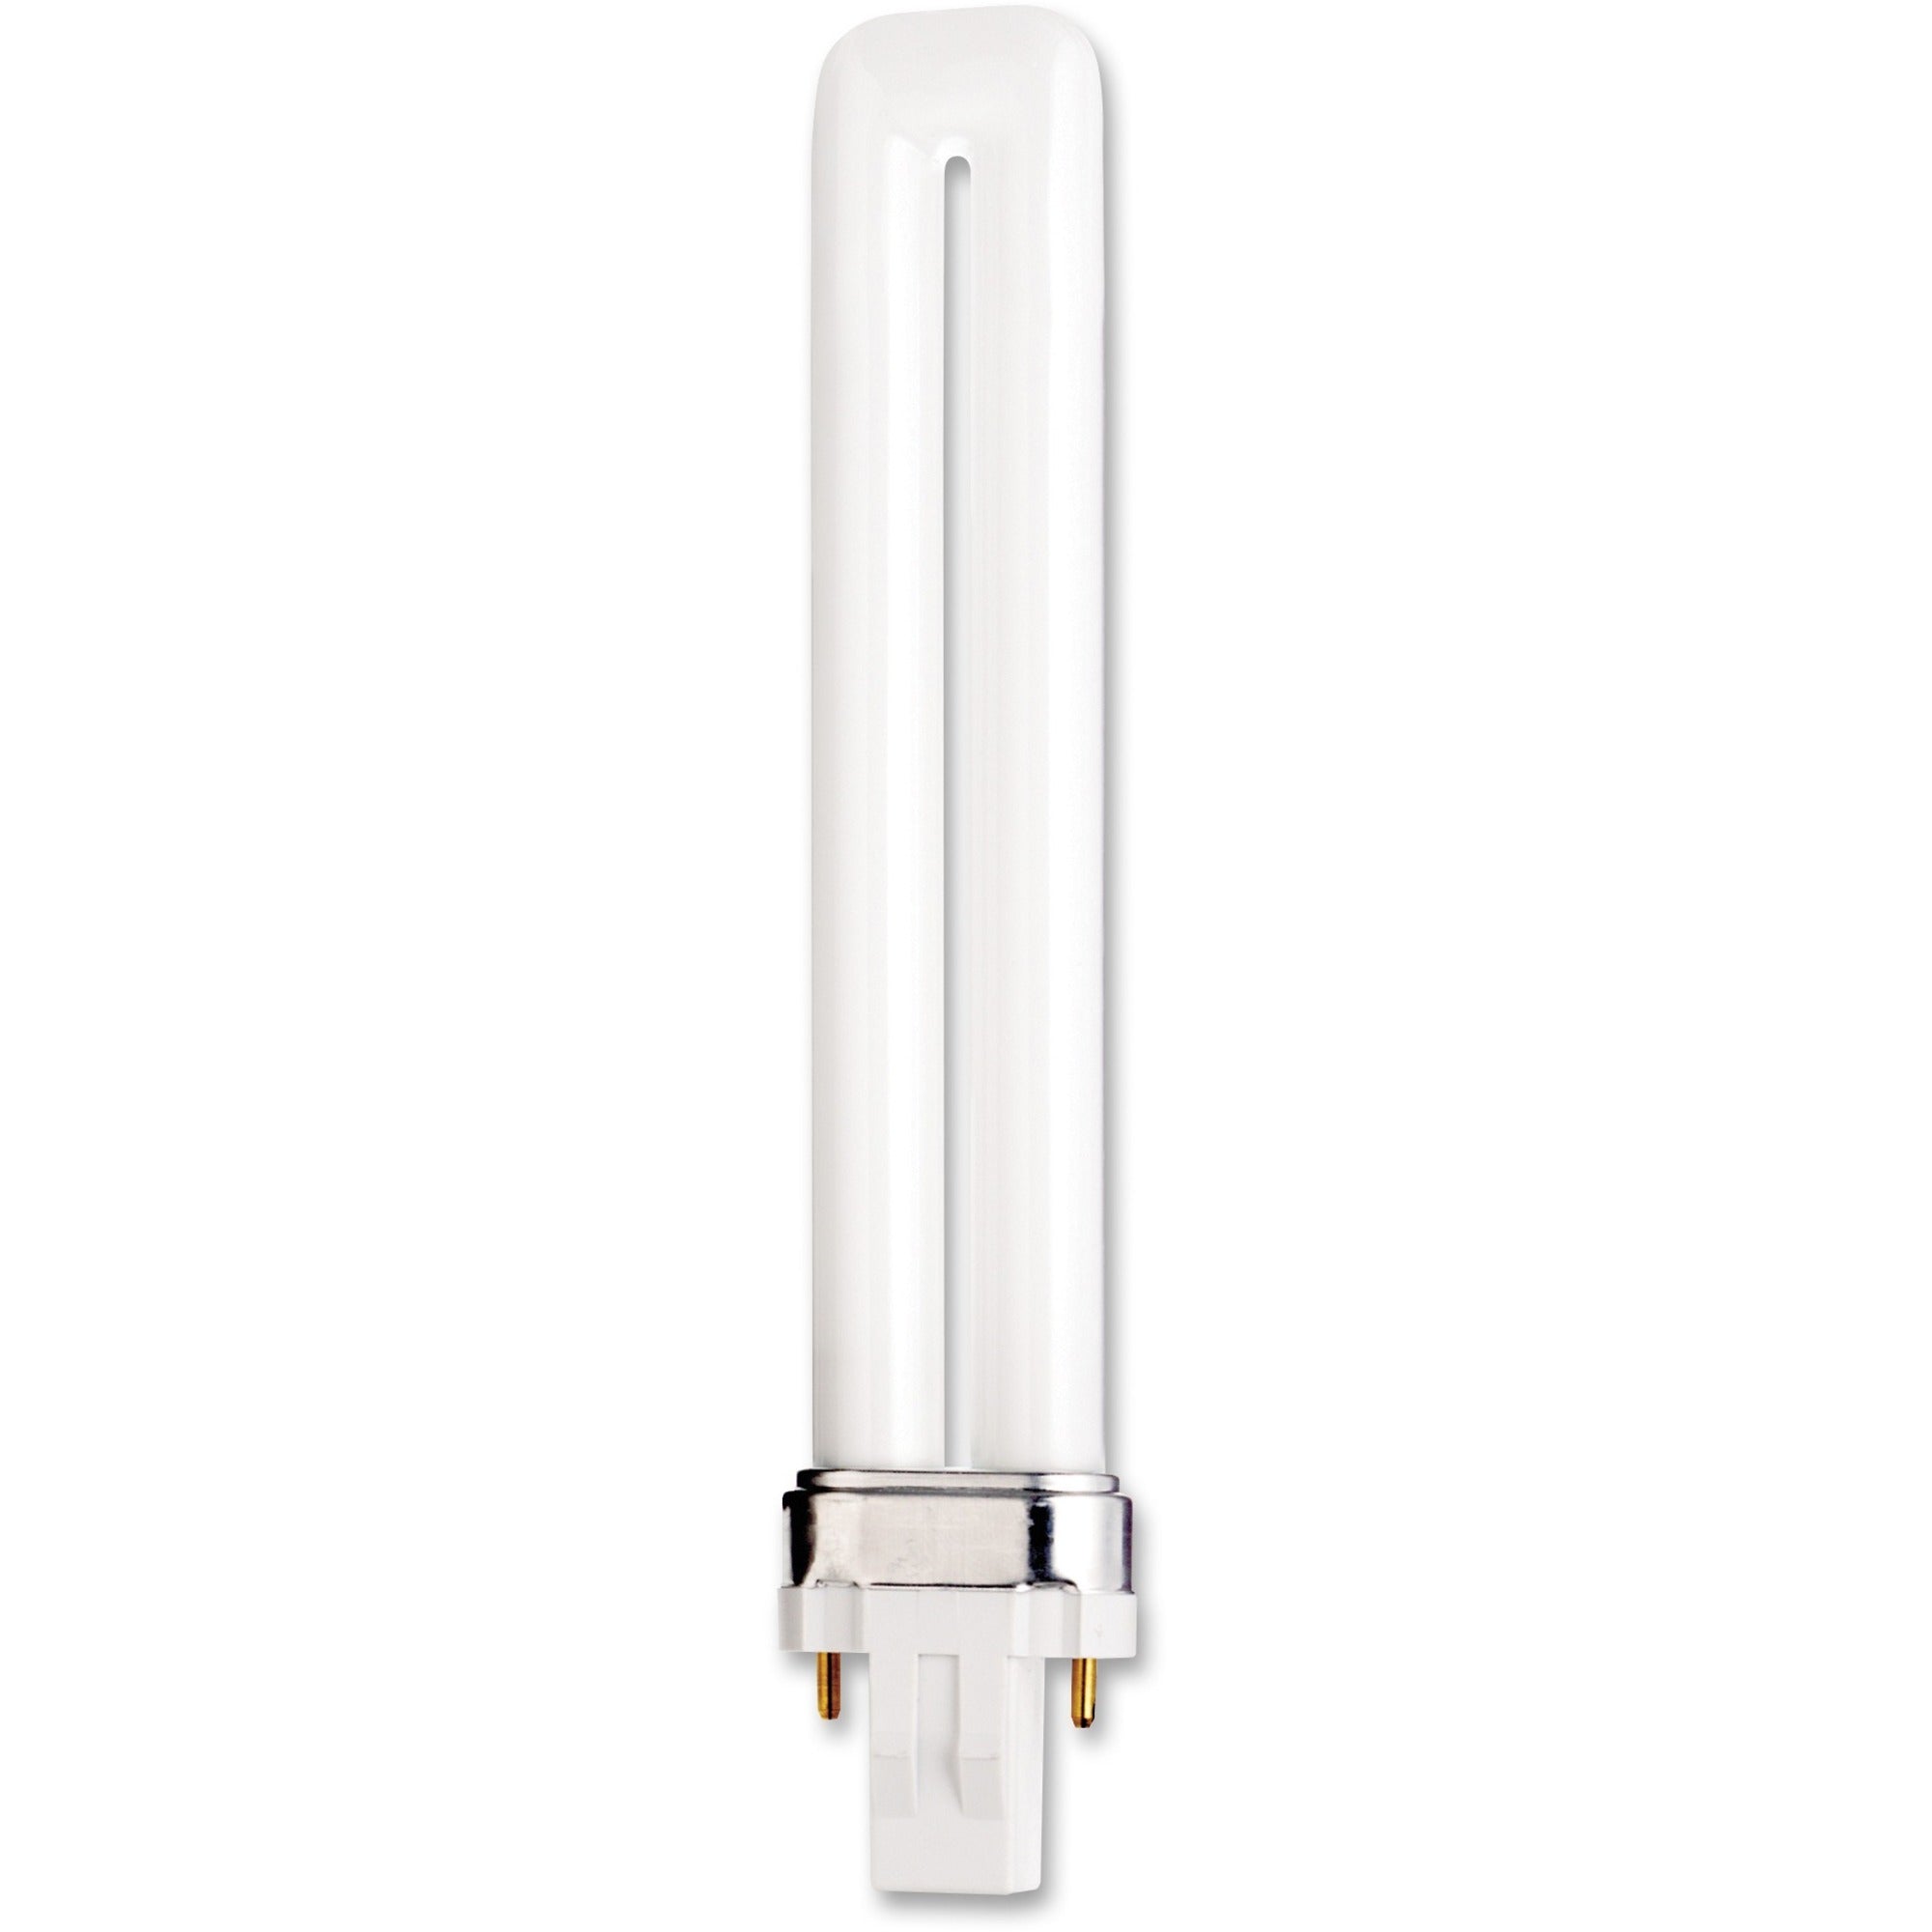 Satco 13-watt Pin-based Compact Fluorescent Bulb - 13 W - 800 lm - T4 Size - Warm White Light Color - GX23 Base - 12000 Hour - 4400.3degF (2426.8degC) Color Temperature - 82 CRI - Energy Saver - 50 / Carton